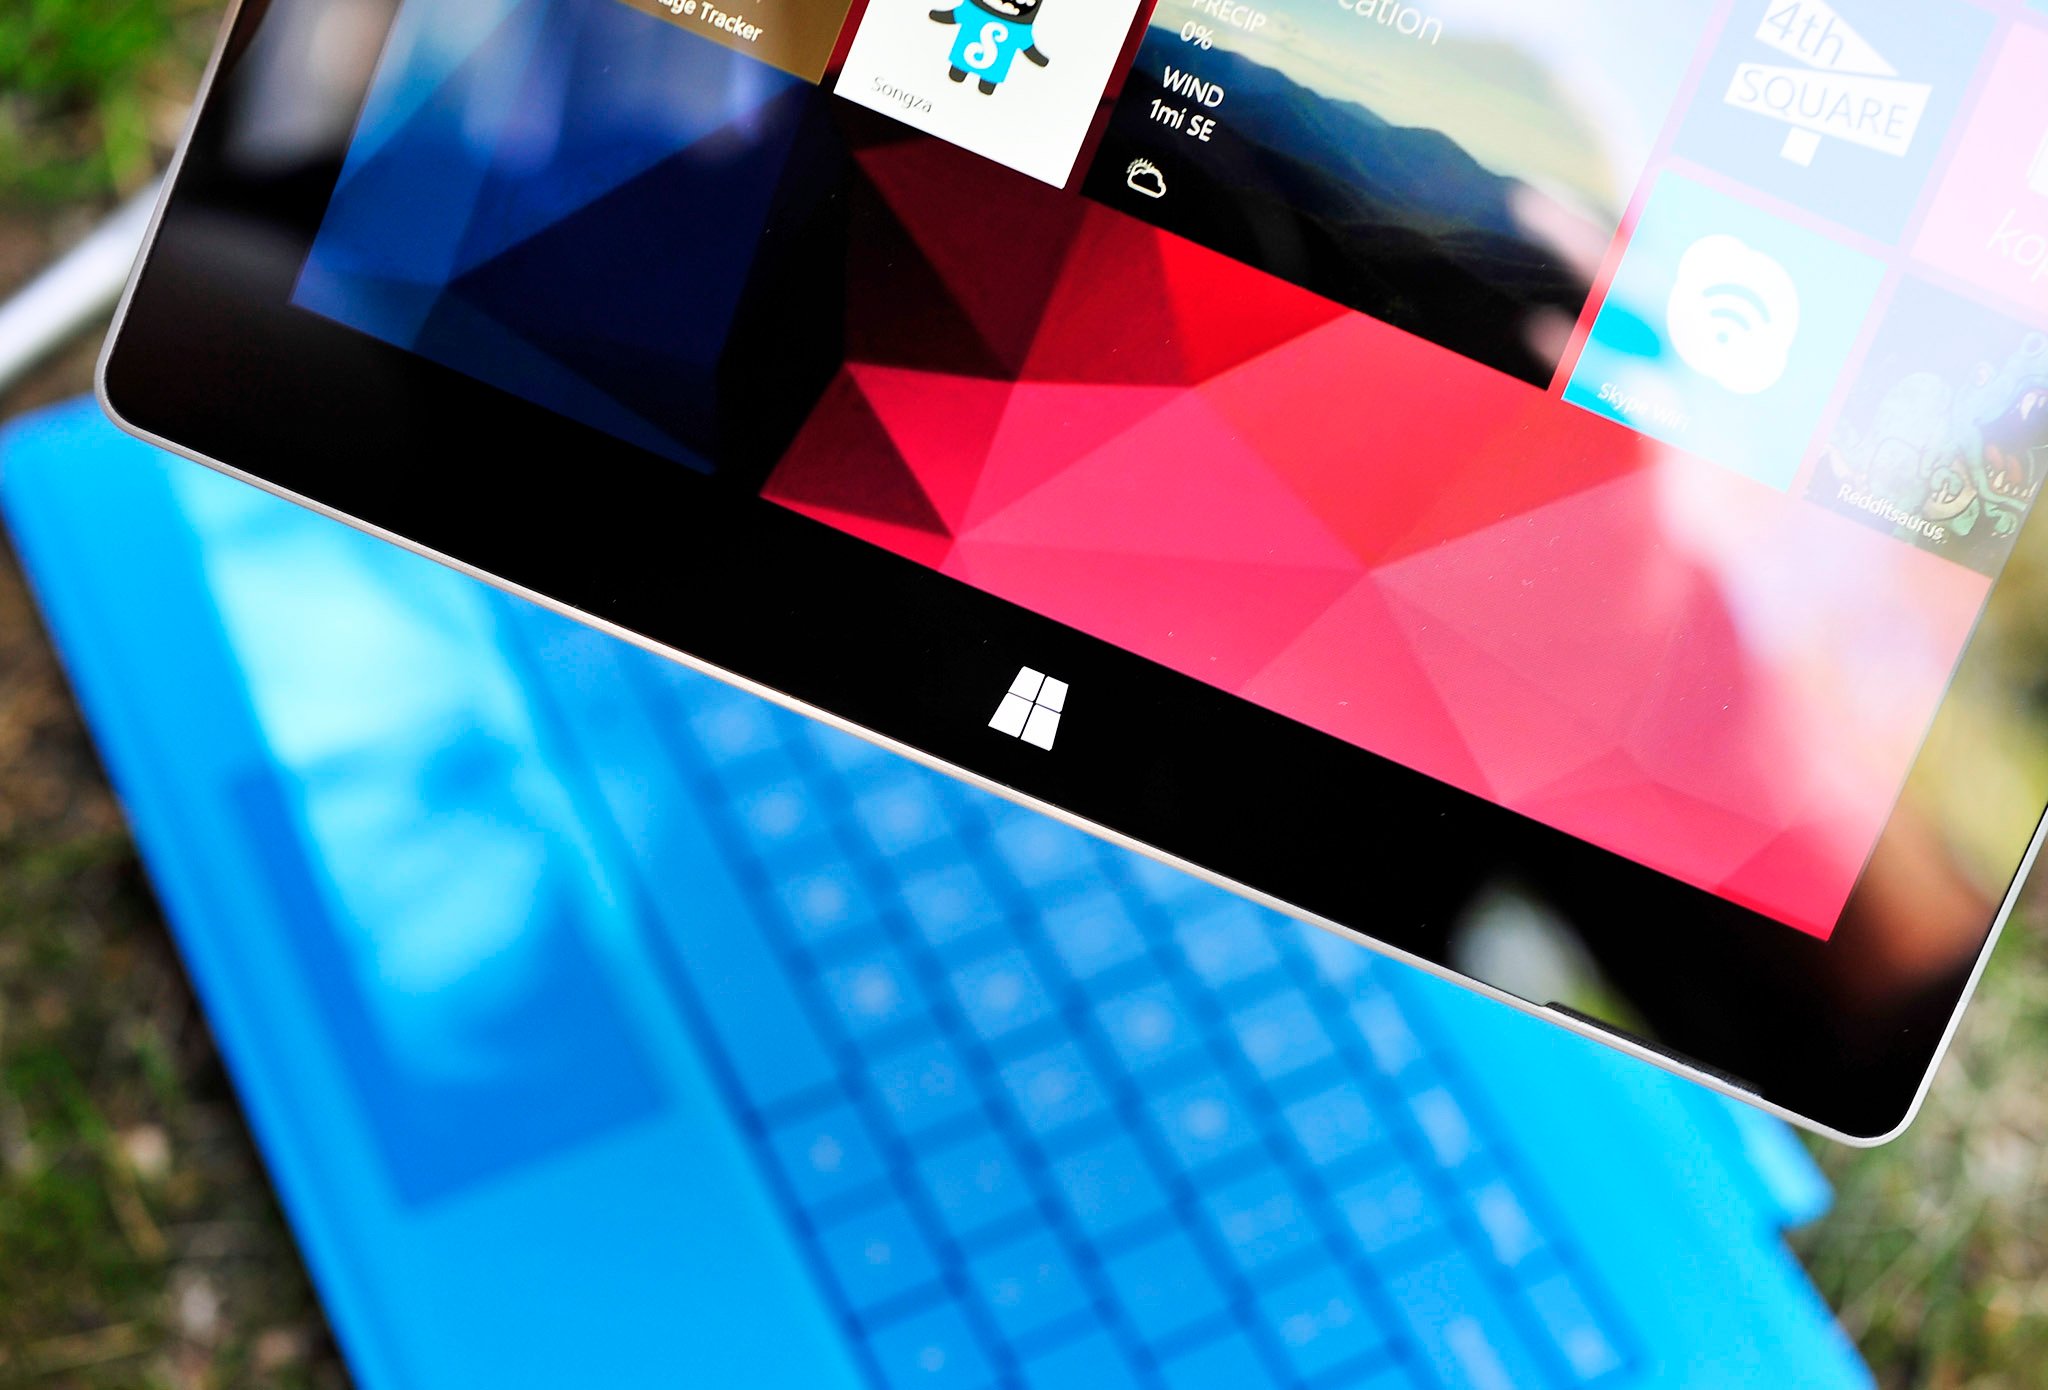 Watch Satya Nadella talk about Adobe partnership and give away free Surface Pro 3s